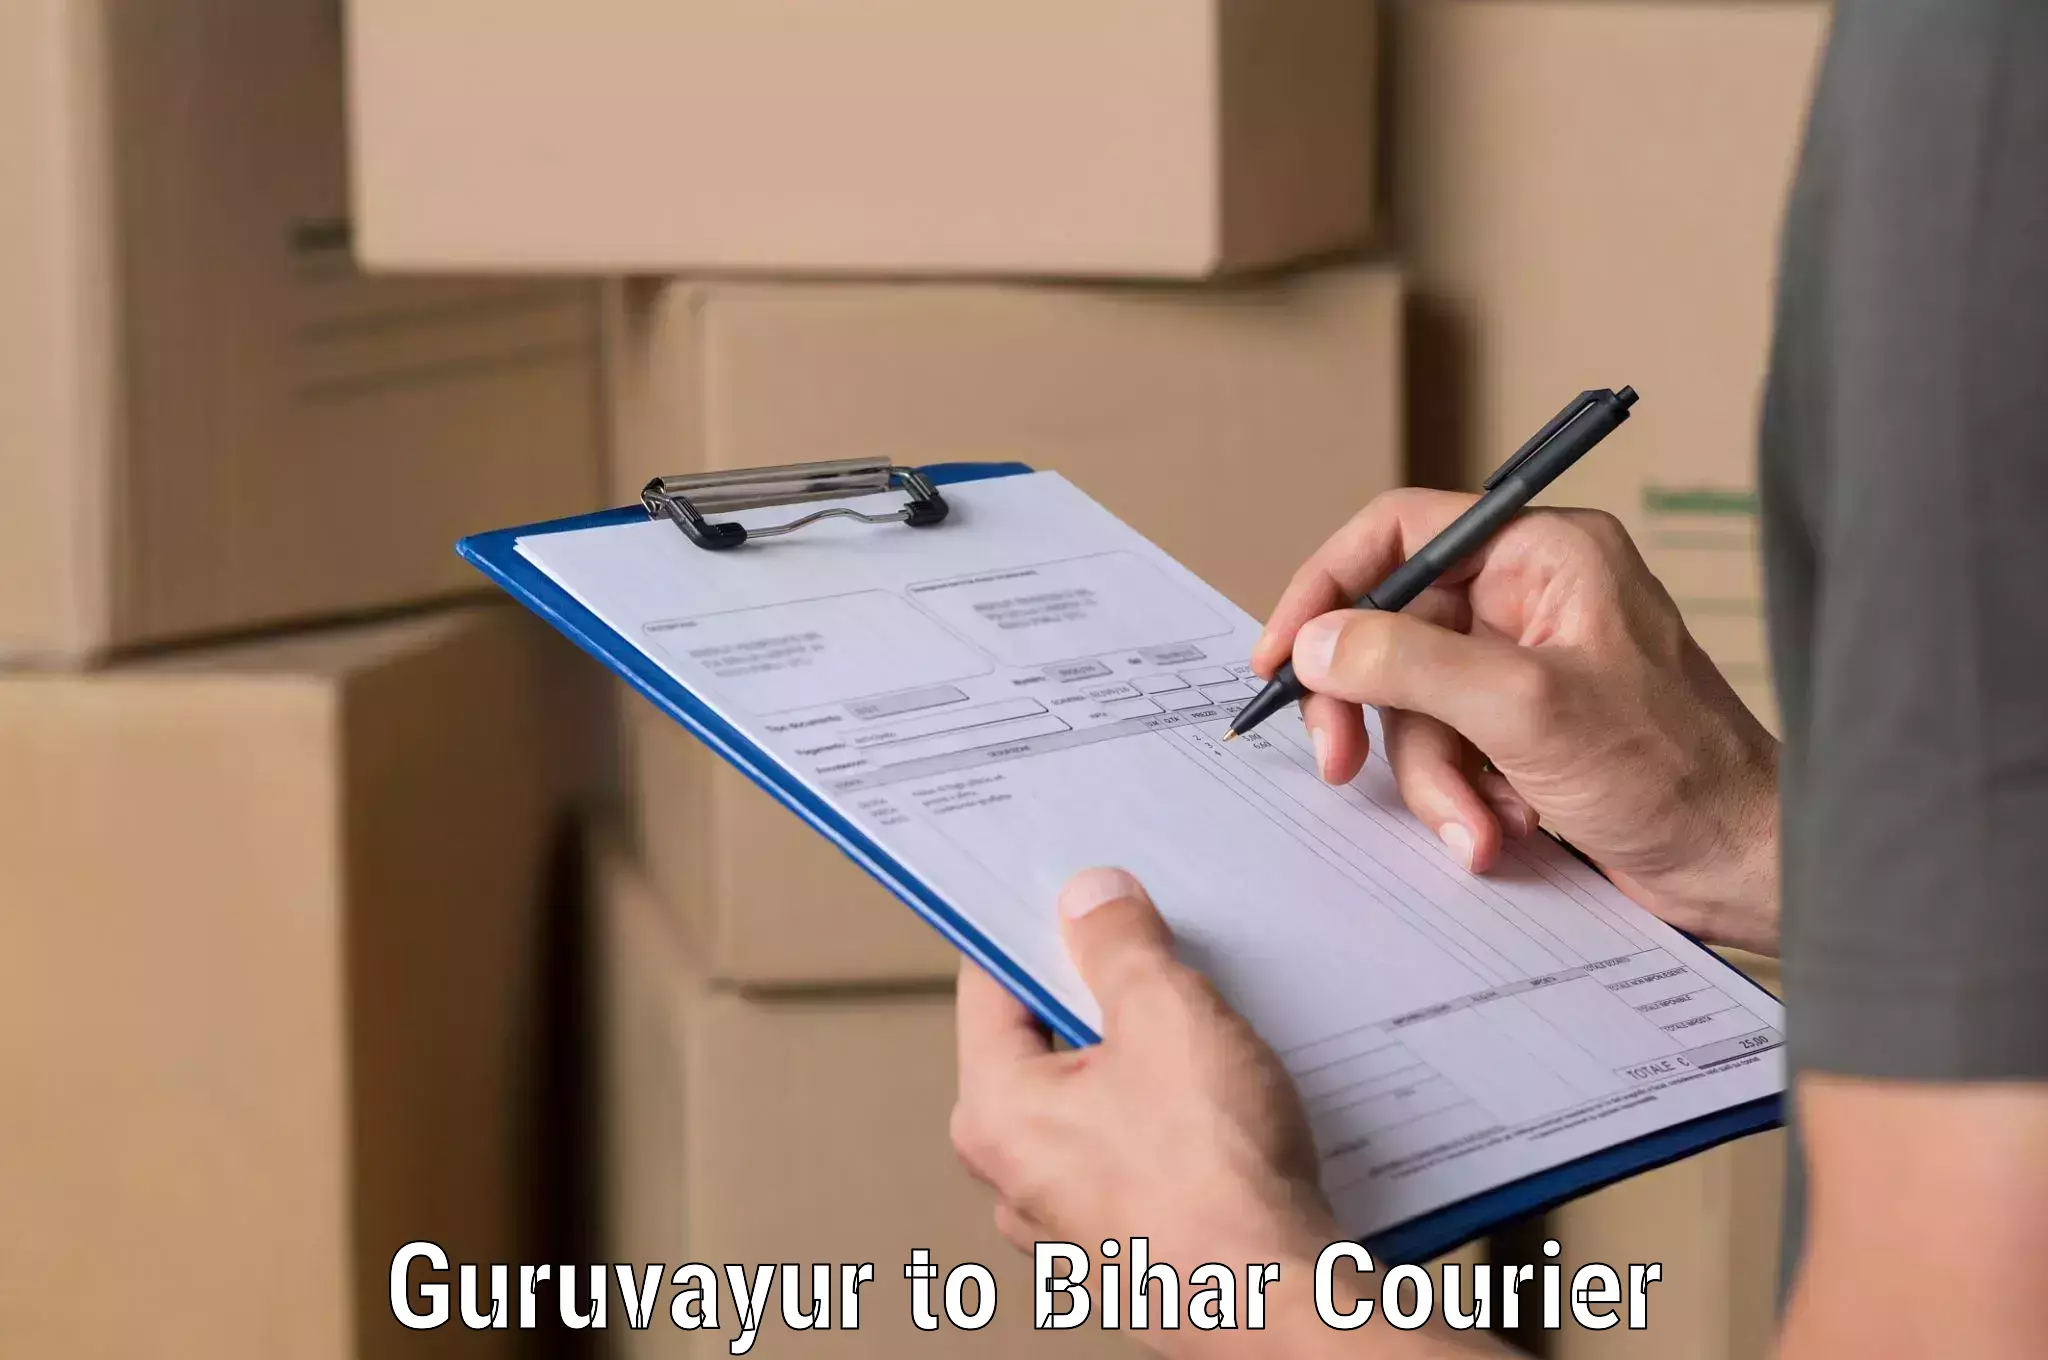 Courier service innovation Guruvayur to Barh